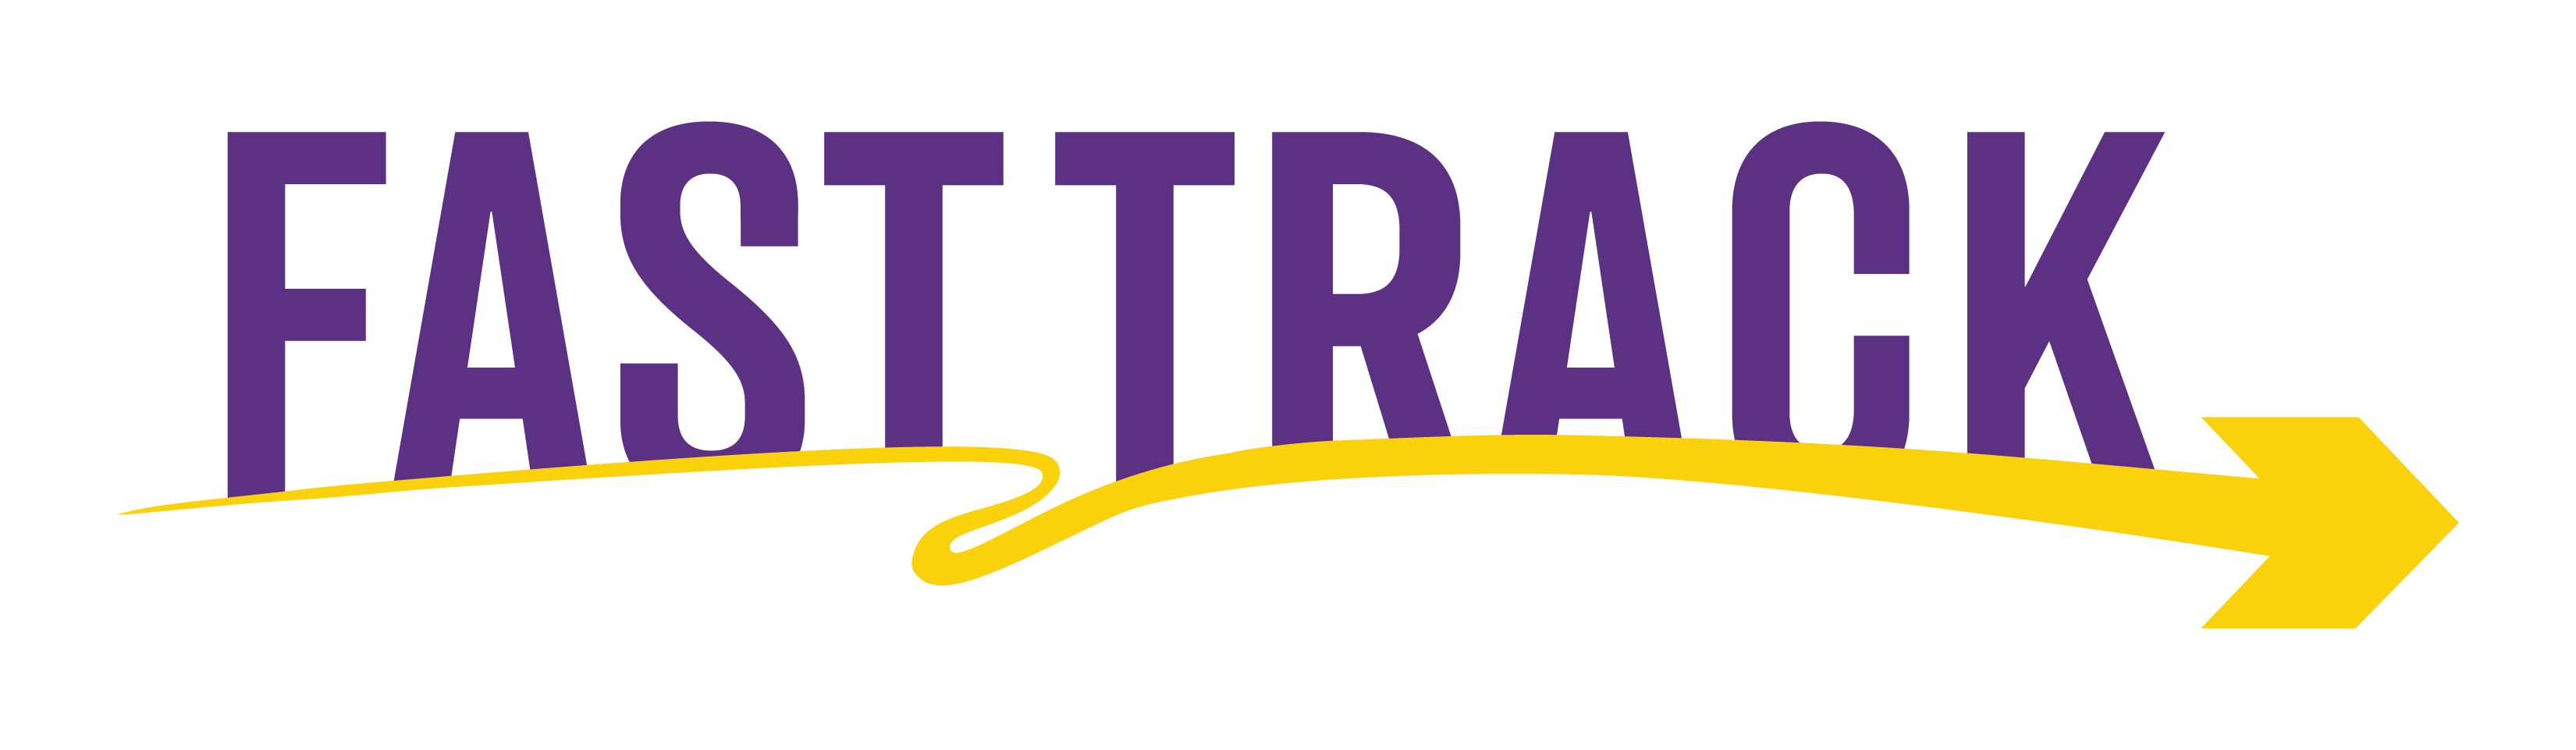 Fast Track logo